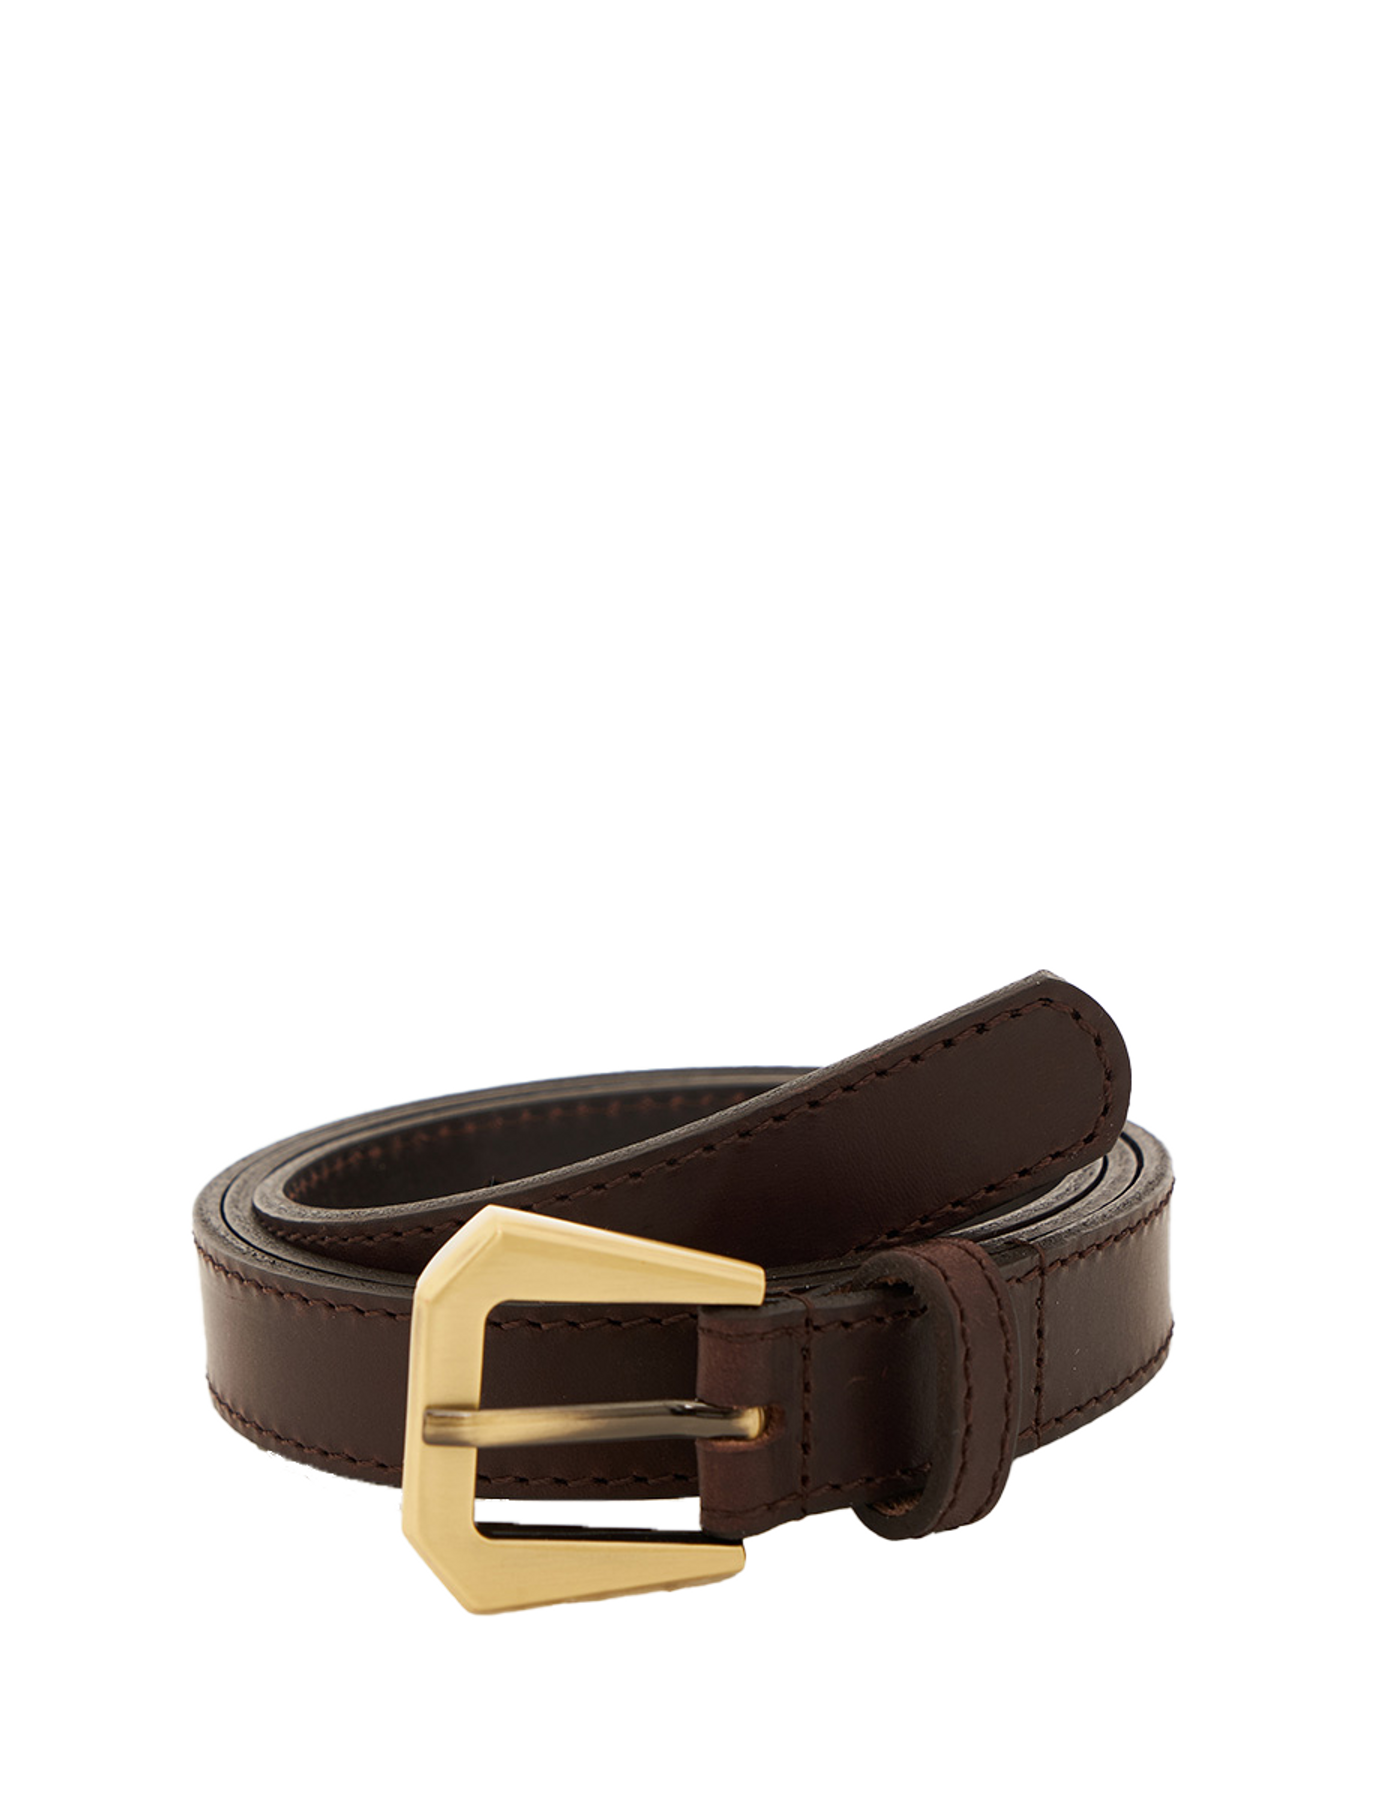 belt-augustine-leather-brown